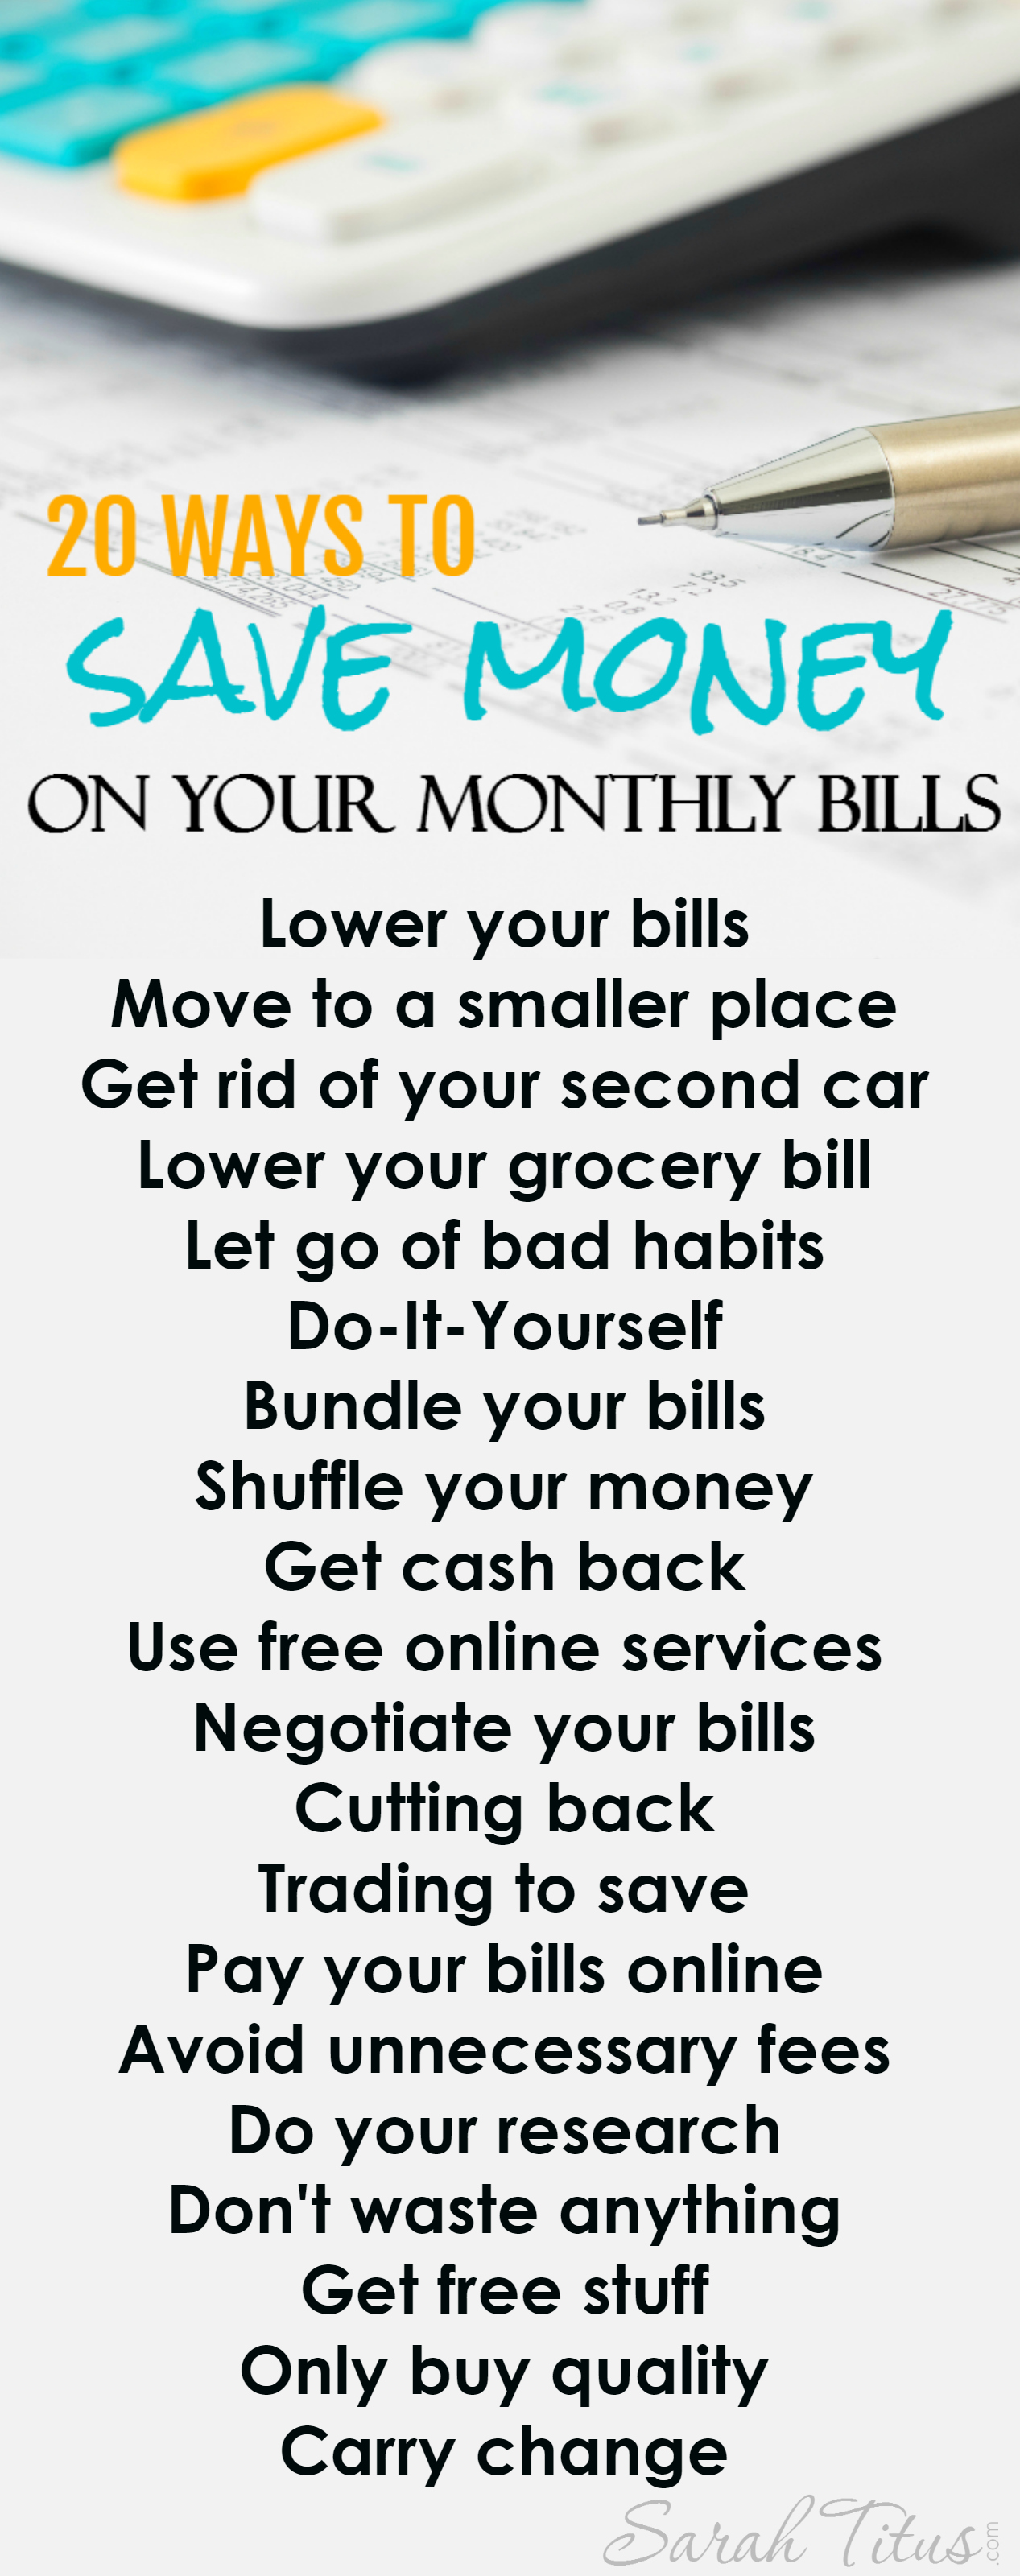 20 Ways to Save Money on Your Monthly Bills - Sarah Titus